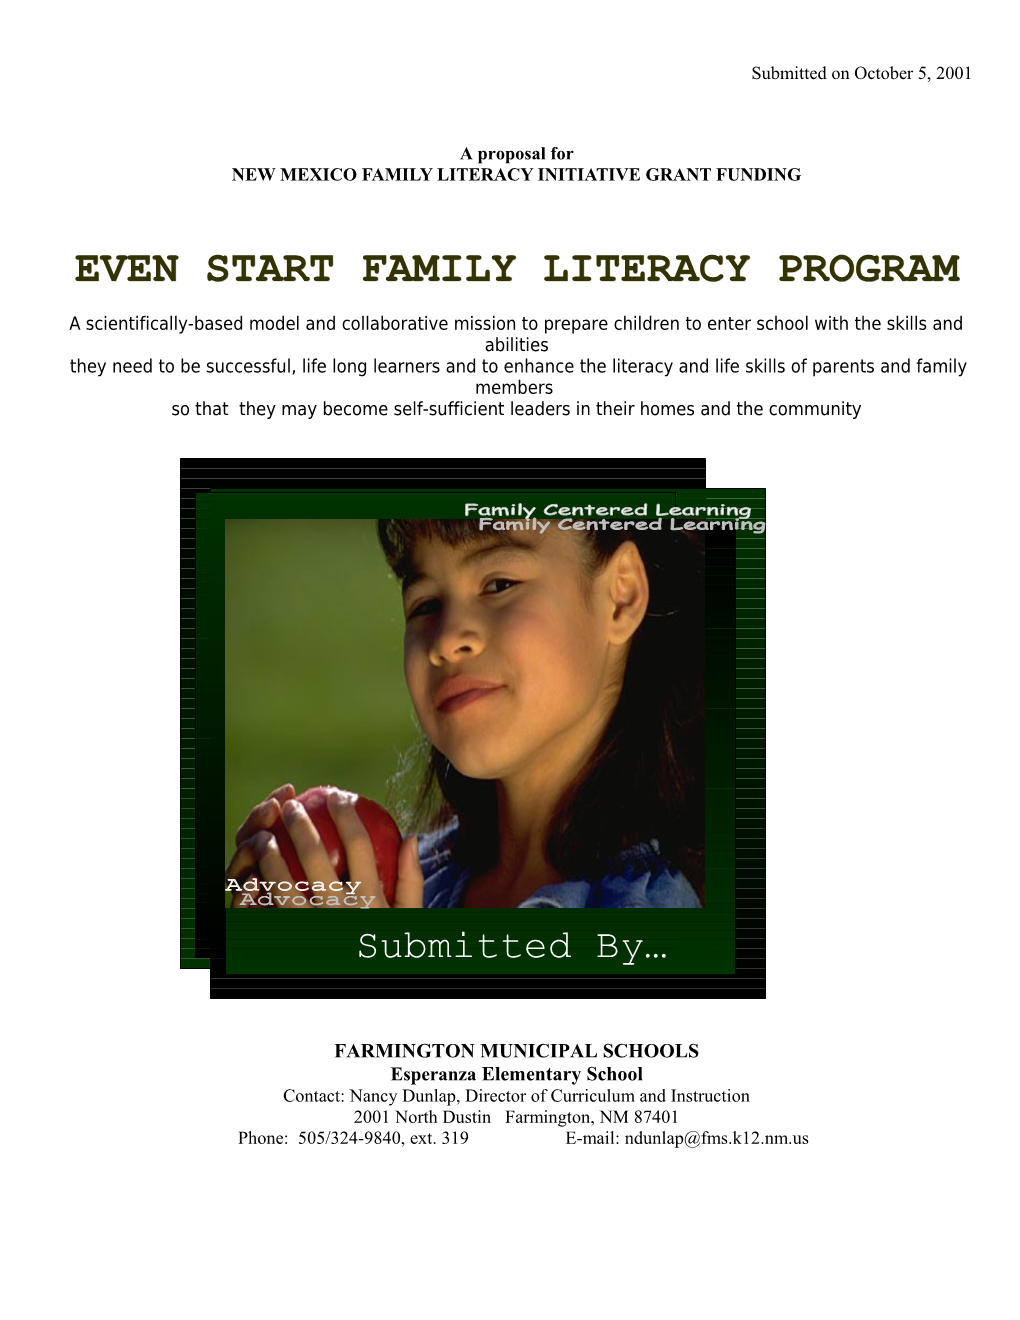 New Mexico Family Literacy Initiative Grant Funding